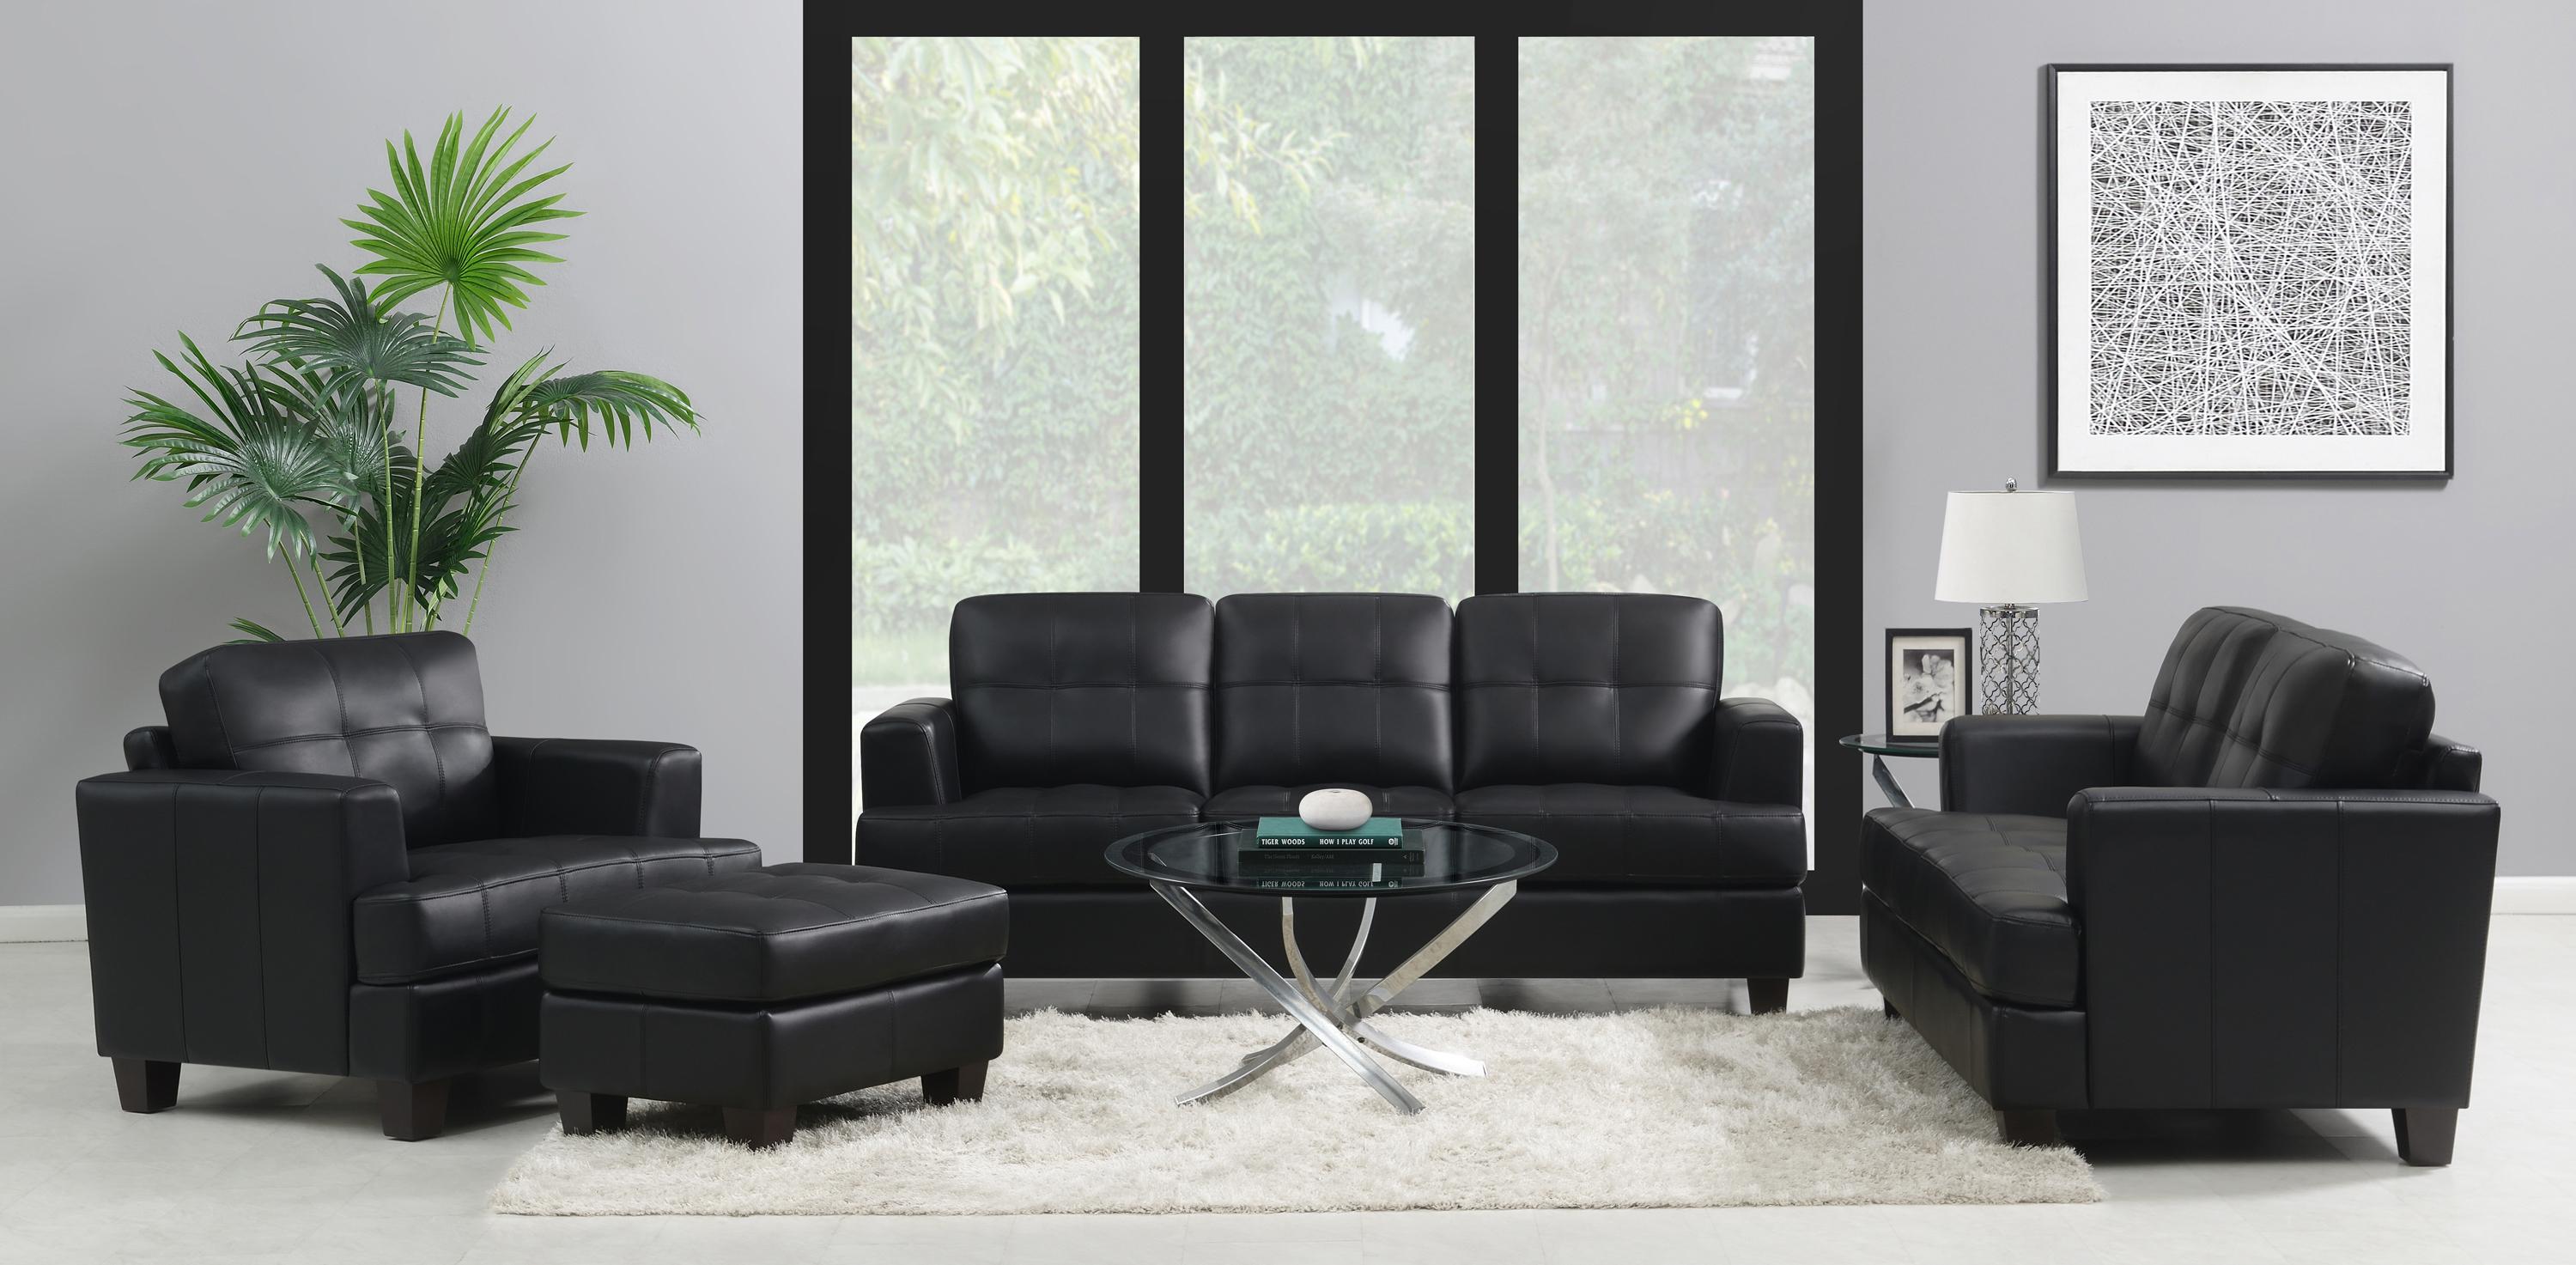 Transitional Living Room Set 501681-S3 Samuel 501681-S3 in Black Leatherette